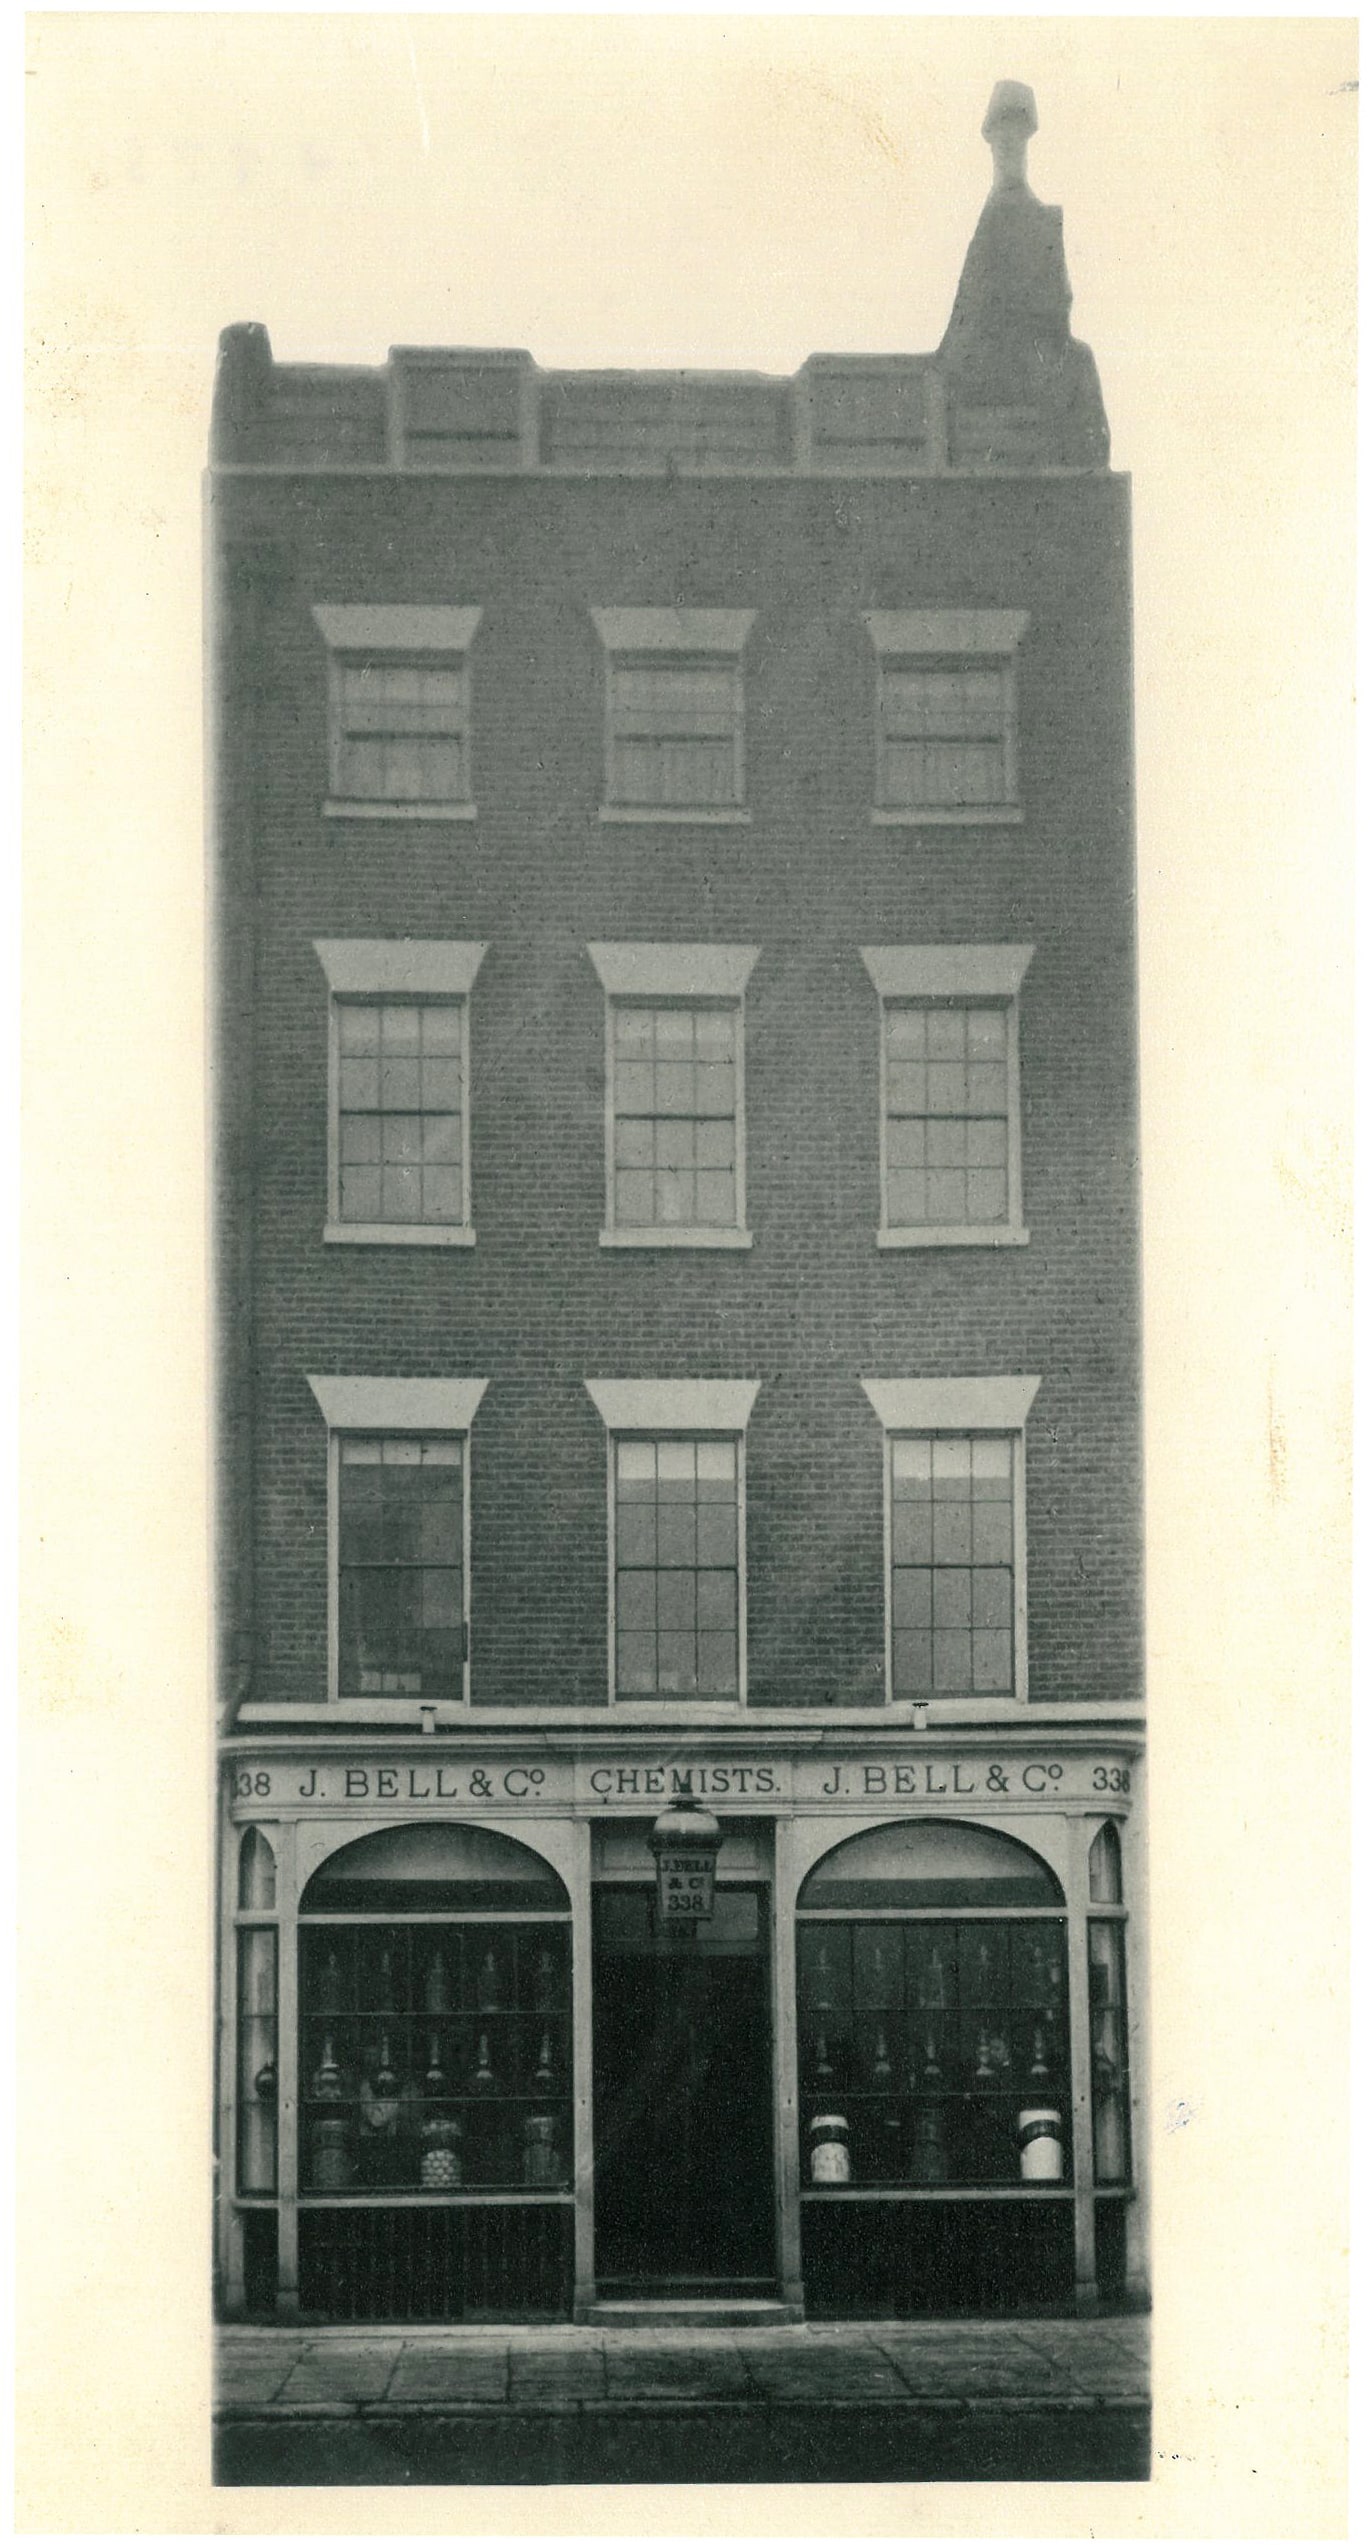 image of John Bell & Co. Chemists, 338 Oxford Street, London, c. 1870